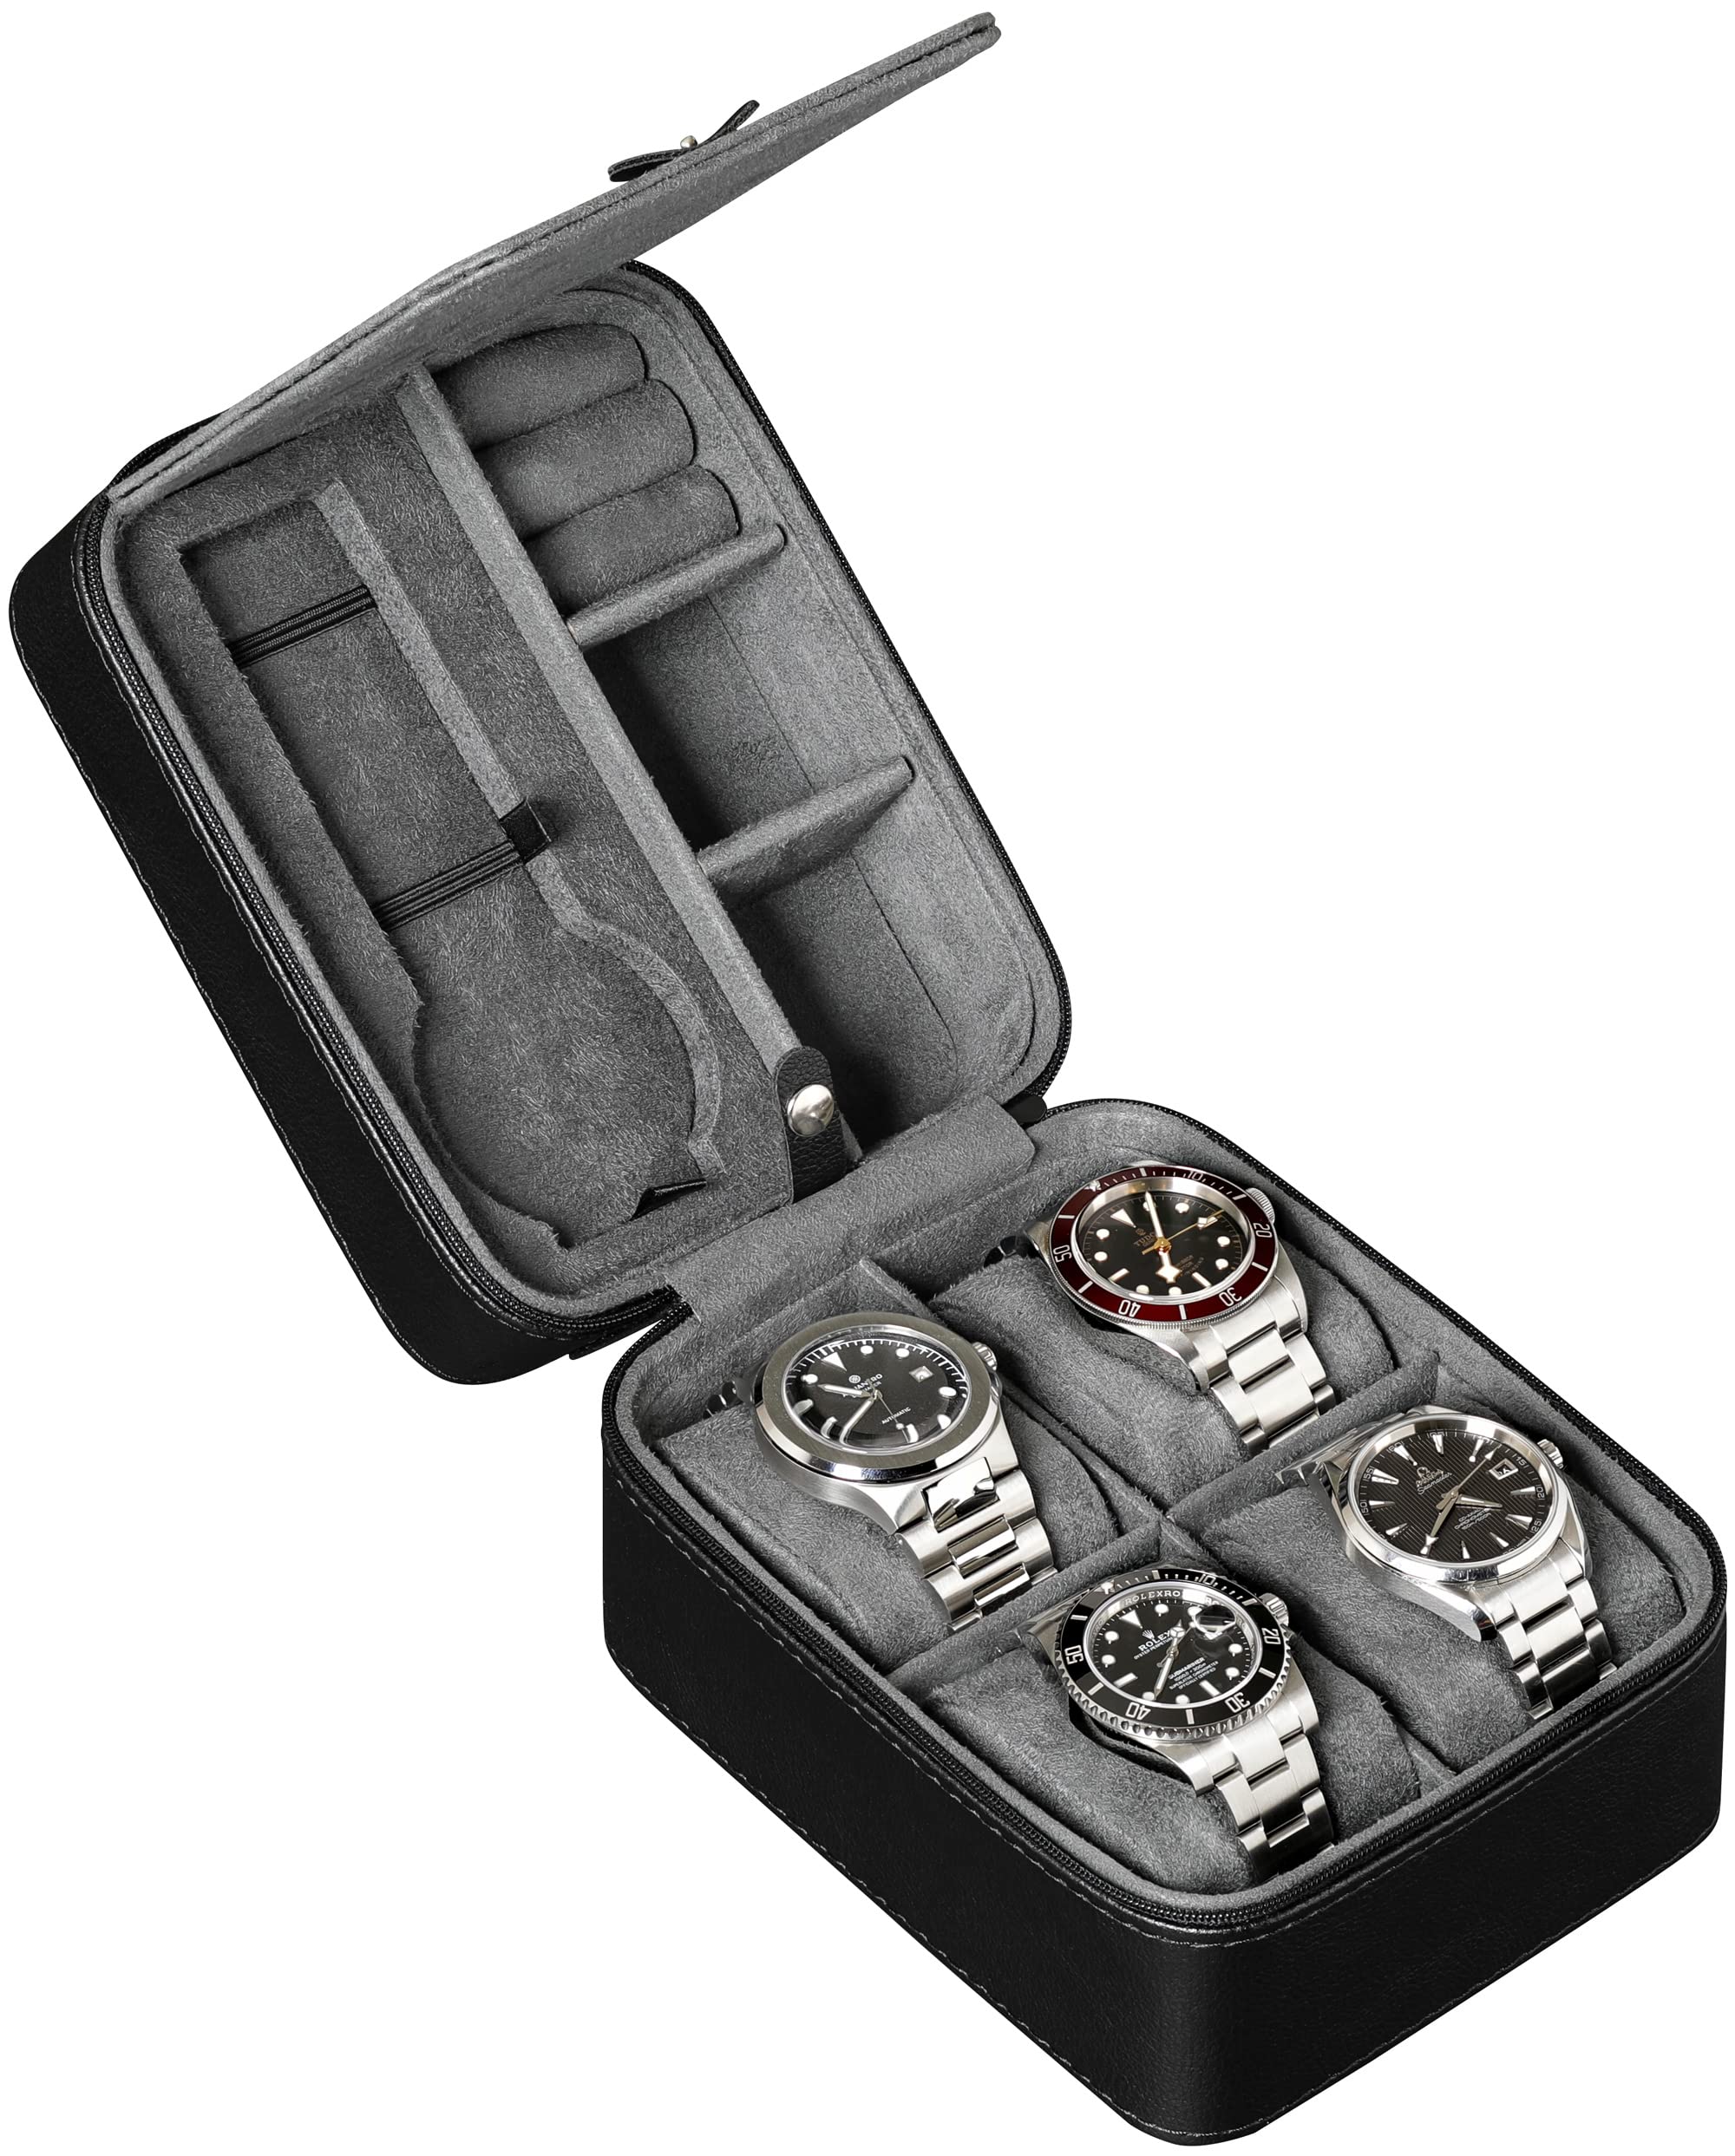 Gift Set 10 Slot Leather Watch Box with Valet Drawer & Matching 5 Watch Travel Case - Luxury Watch Case Display Organizer, Locking Mens Jewelry Watches Holder, Men's Storage Boxes Glass Top Black/Grey